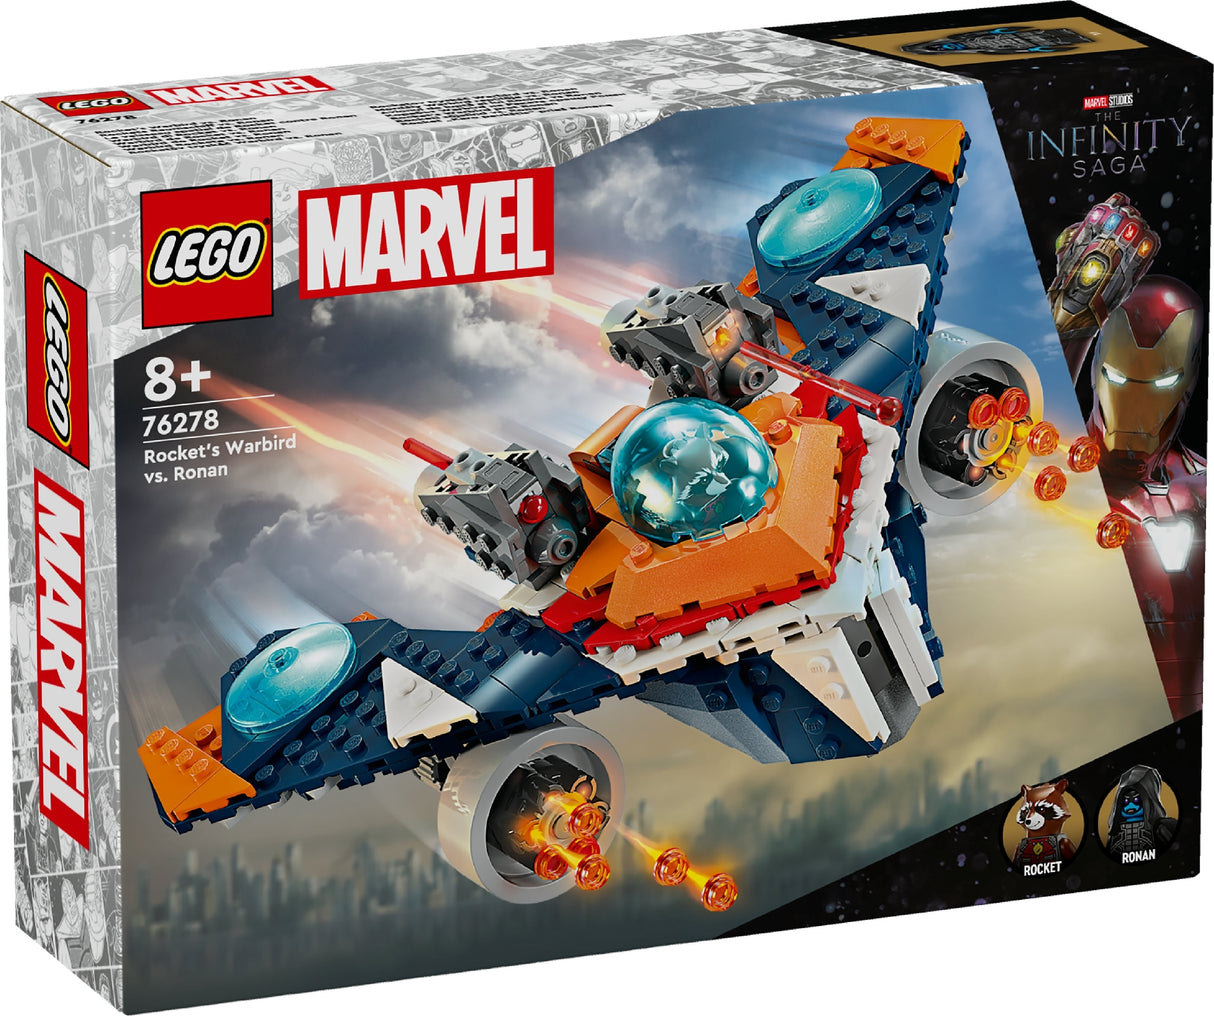 LEGO MARVEL ROCKET'S WARBIRD VS RONAN 76278 AGE: 8+